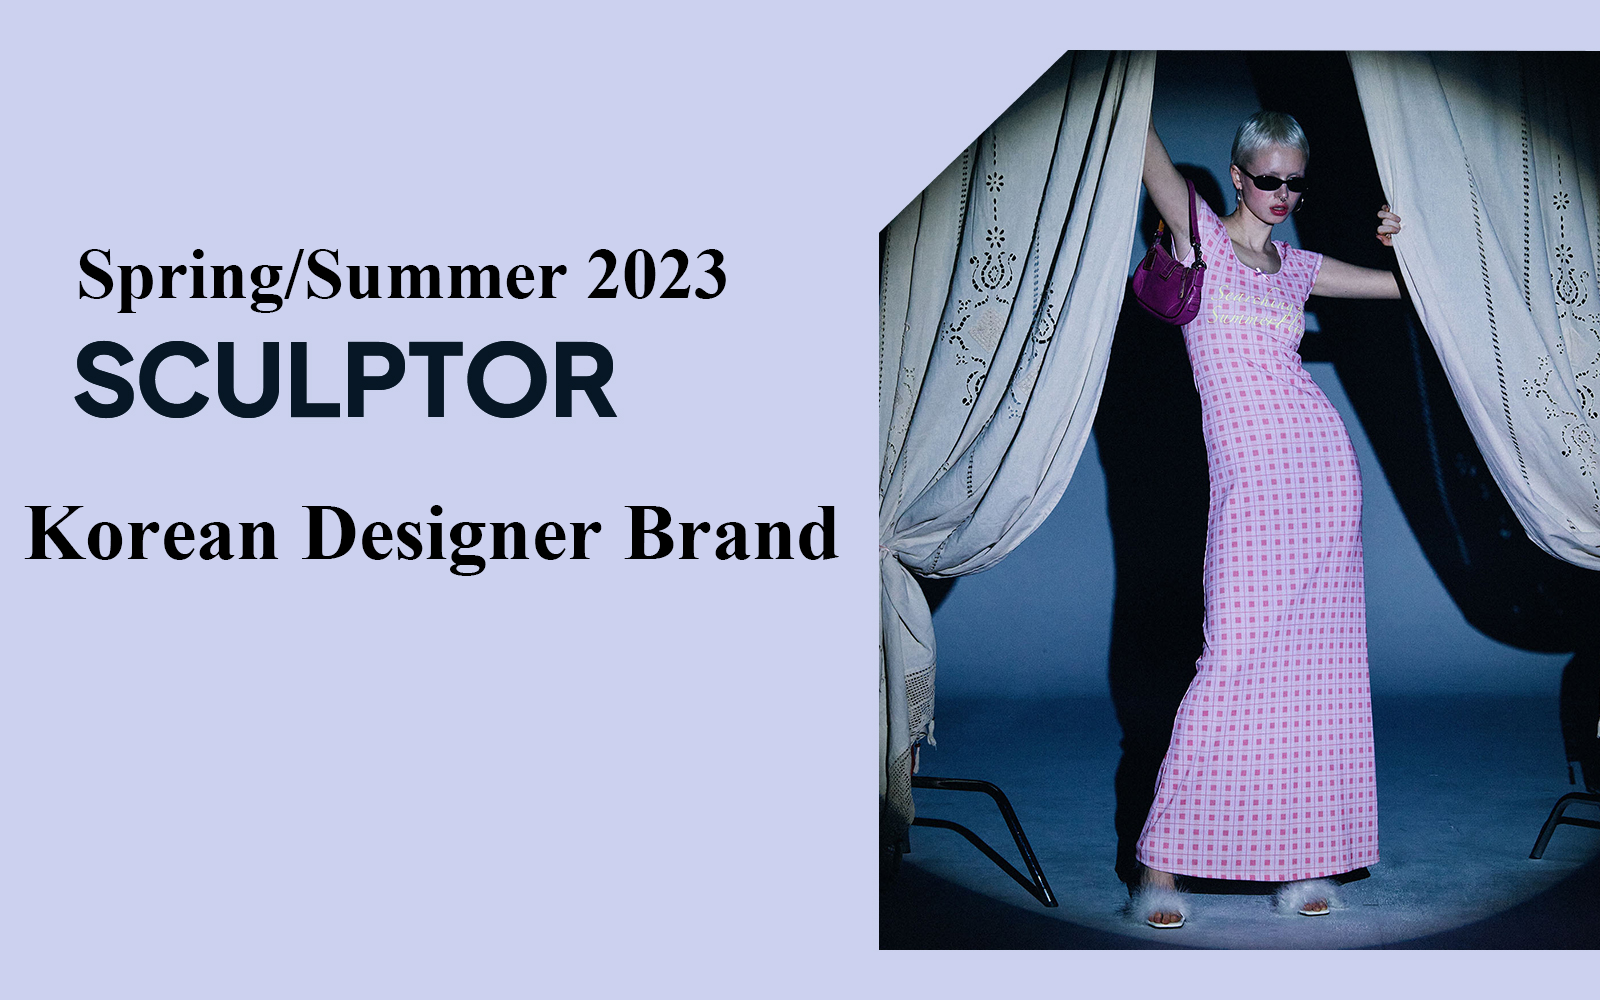 The Analysis of SCULPTOR The Womenswear Designer Brand